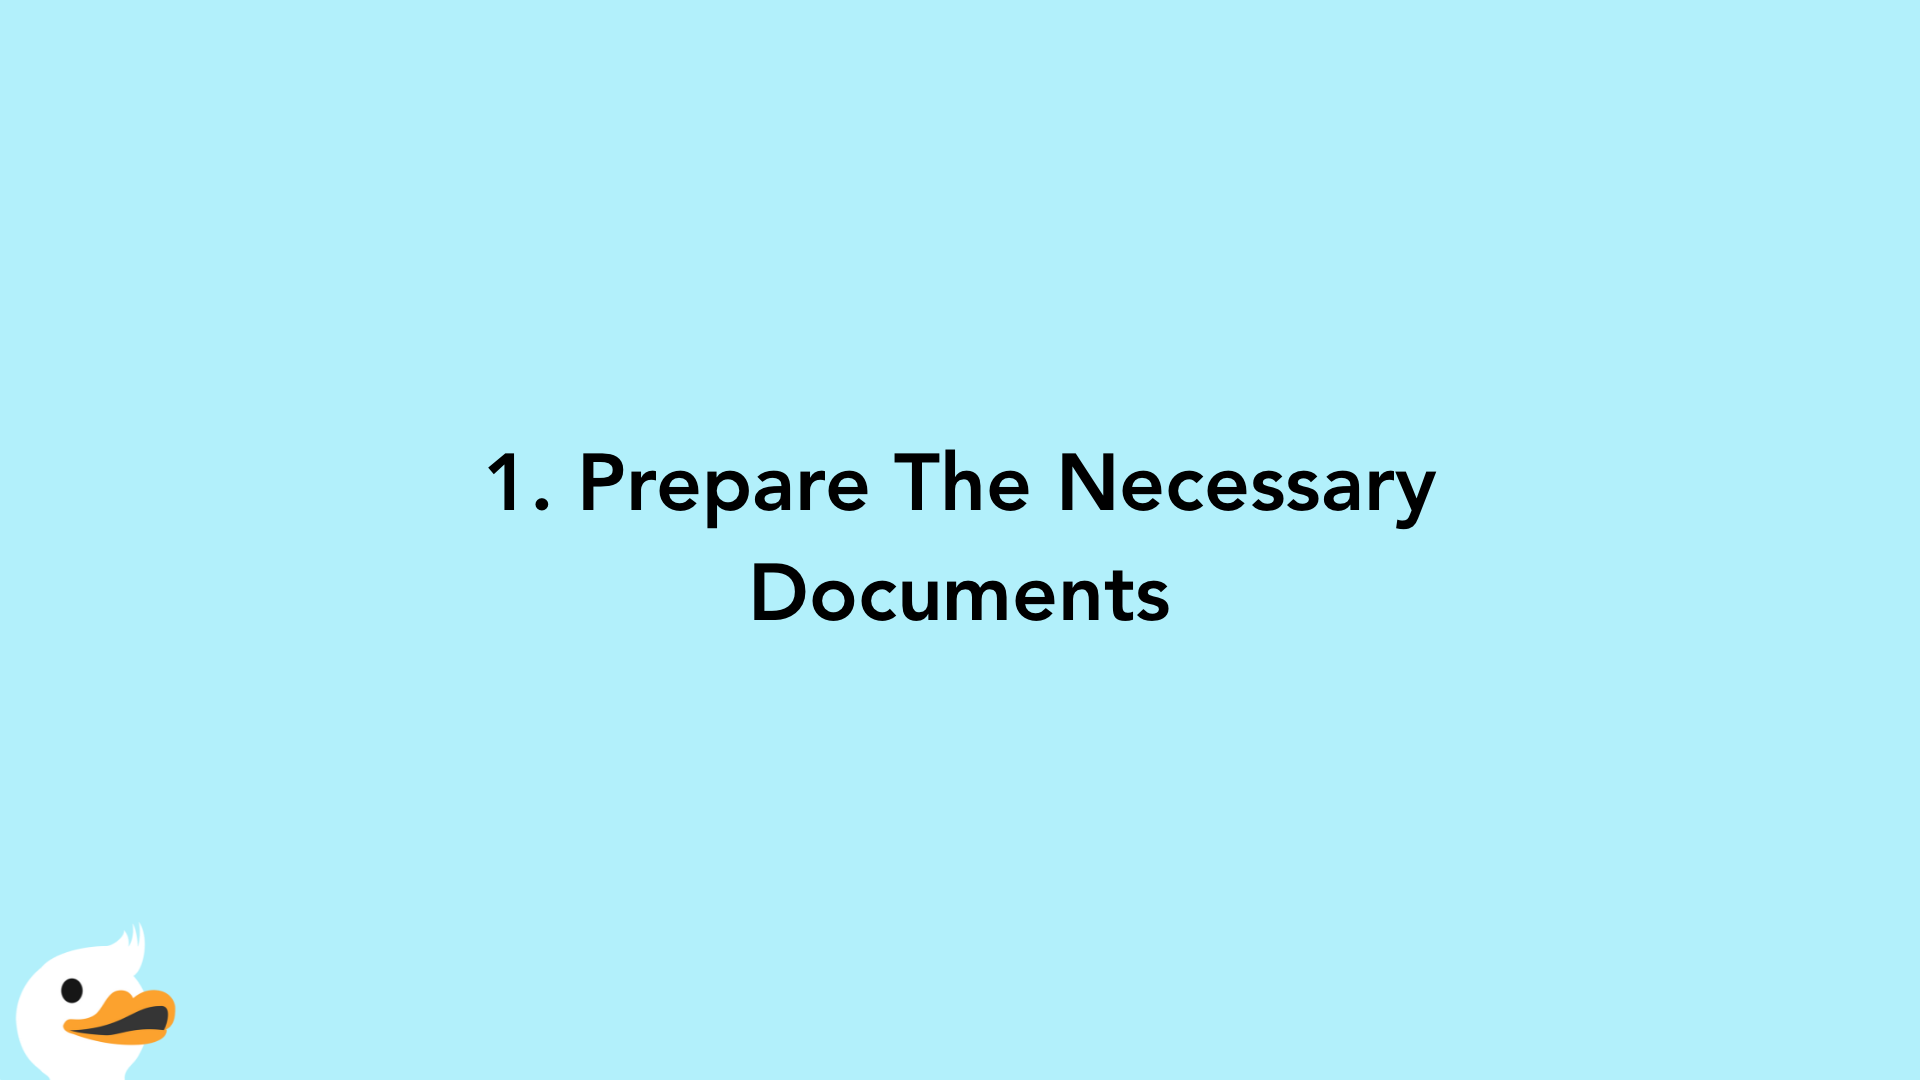 1. Prepare The Necessary Documents